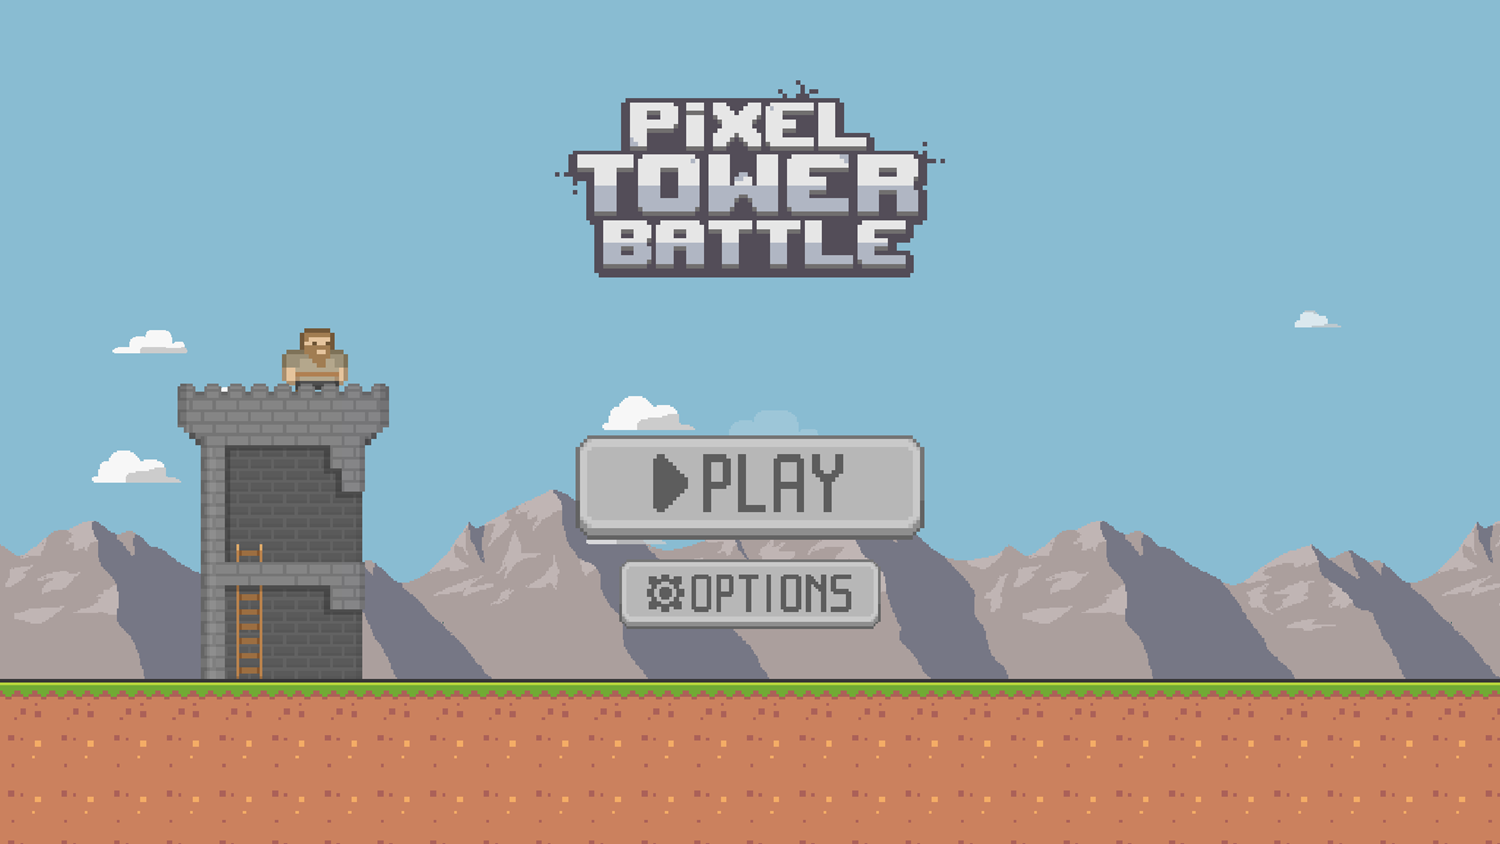 Pixel Tower Battle Game Welcome Screen Screenshot.